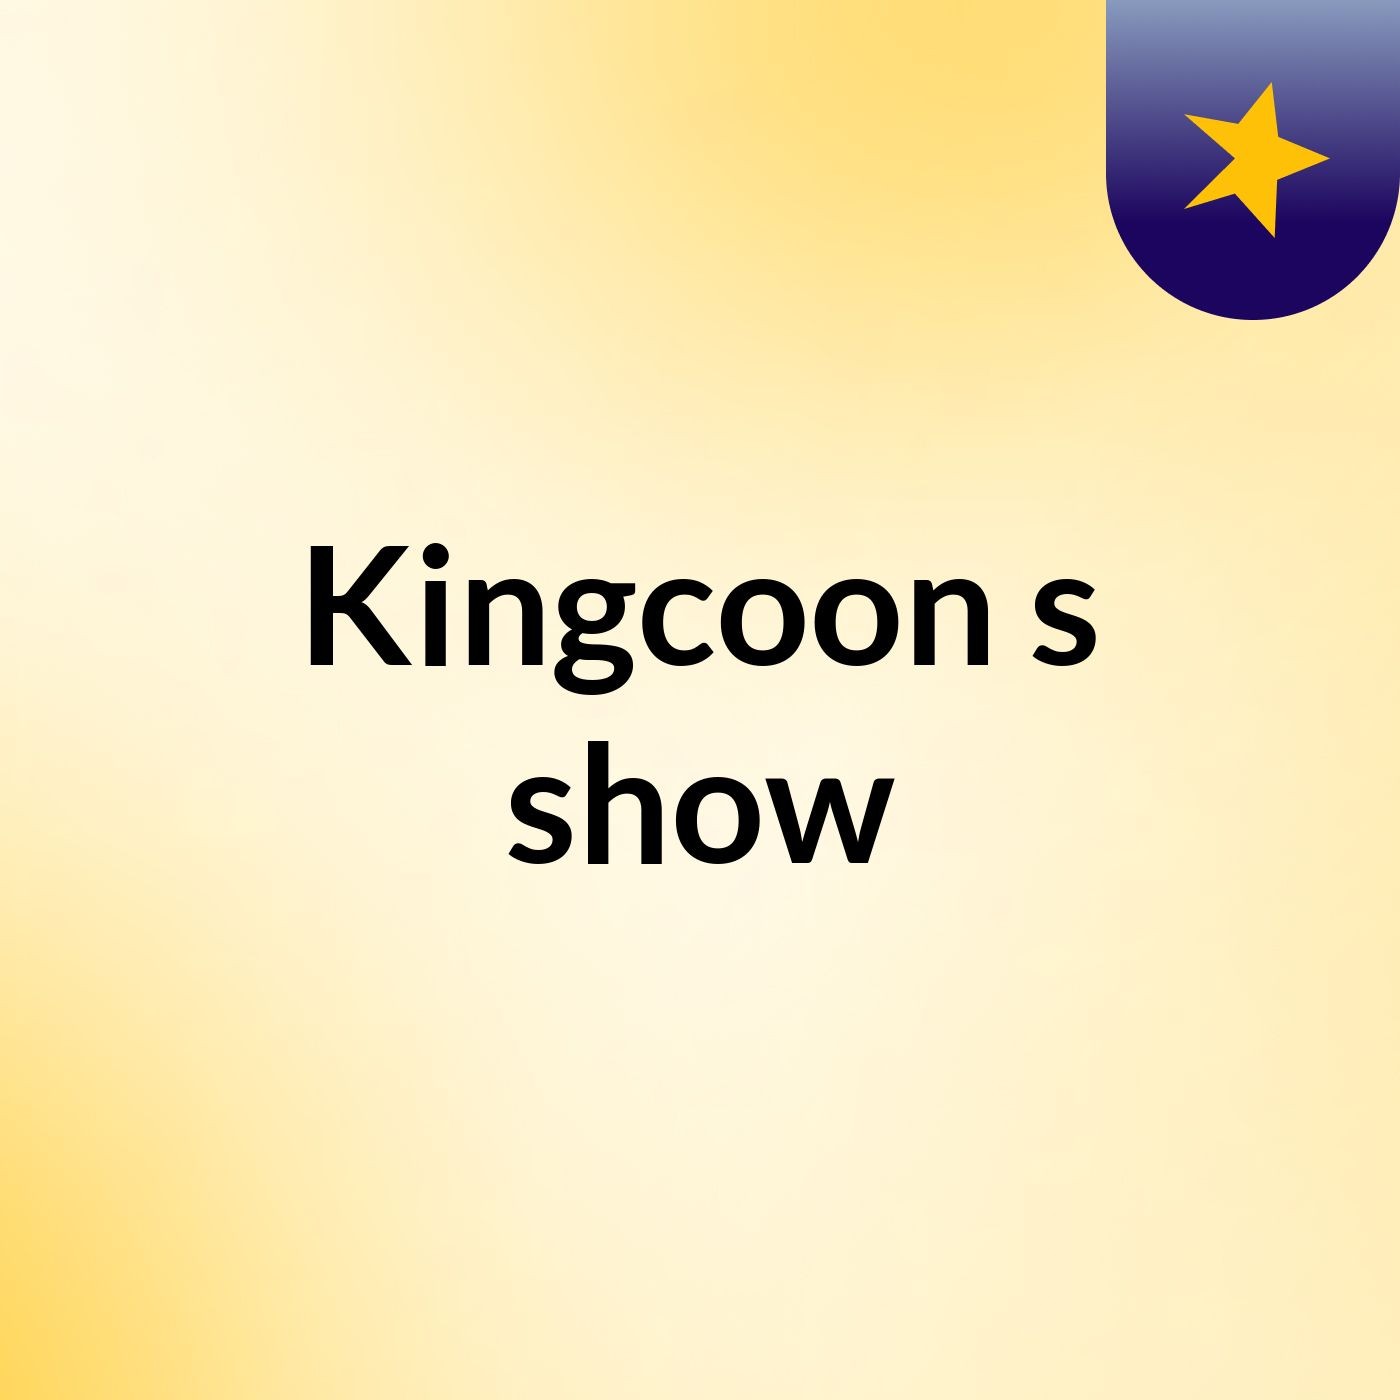 Kingcoon's show